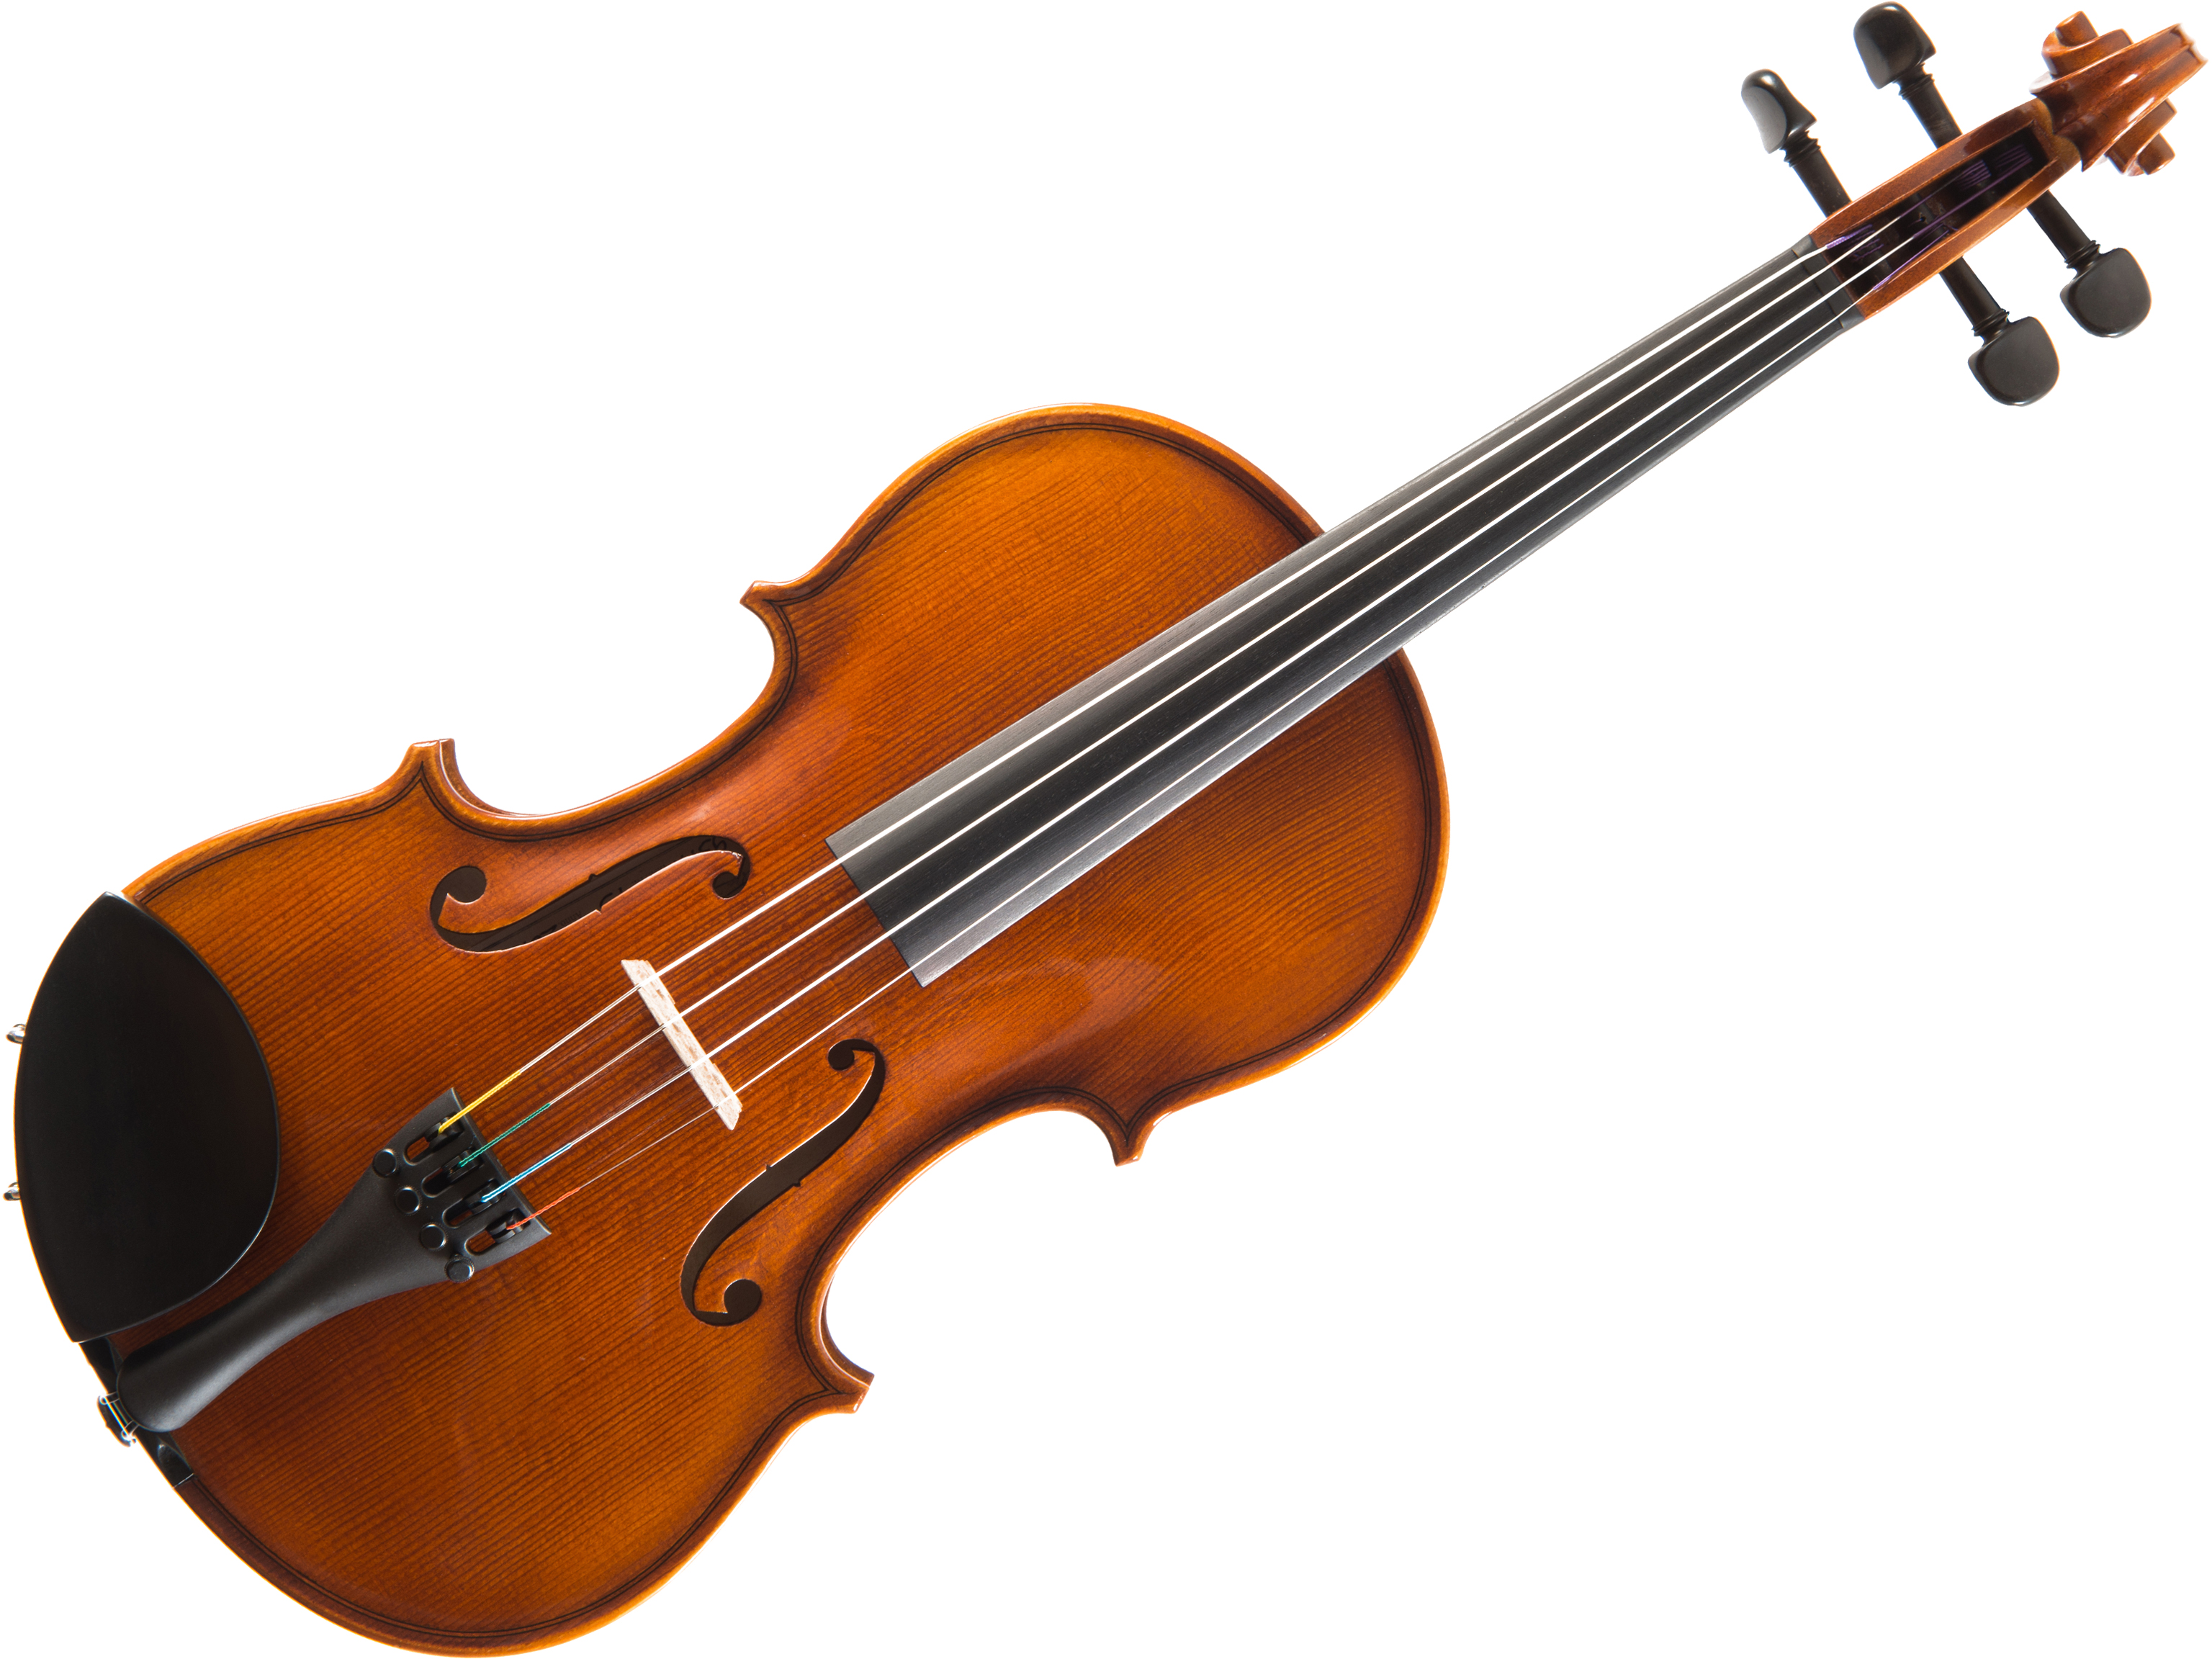 C.A.Götz 98MT Violine 4/4 Menuett Heritage